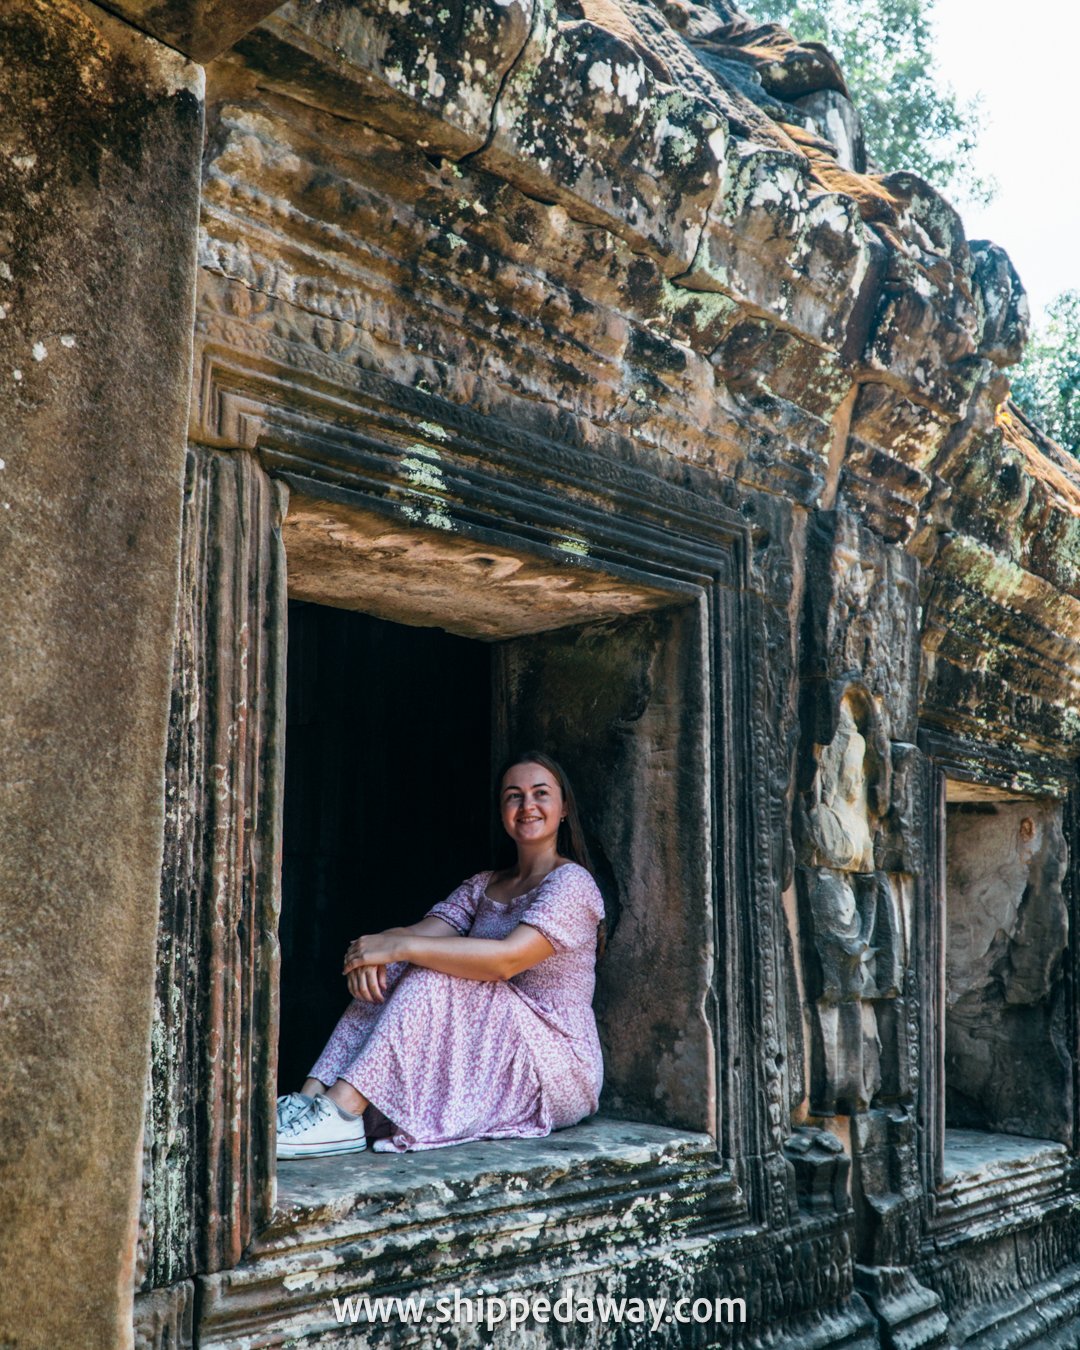 Arijana Tkalcec at the Angkor Wat Archeological Park, Siem Reap